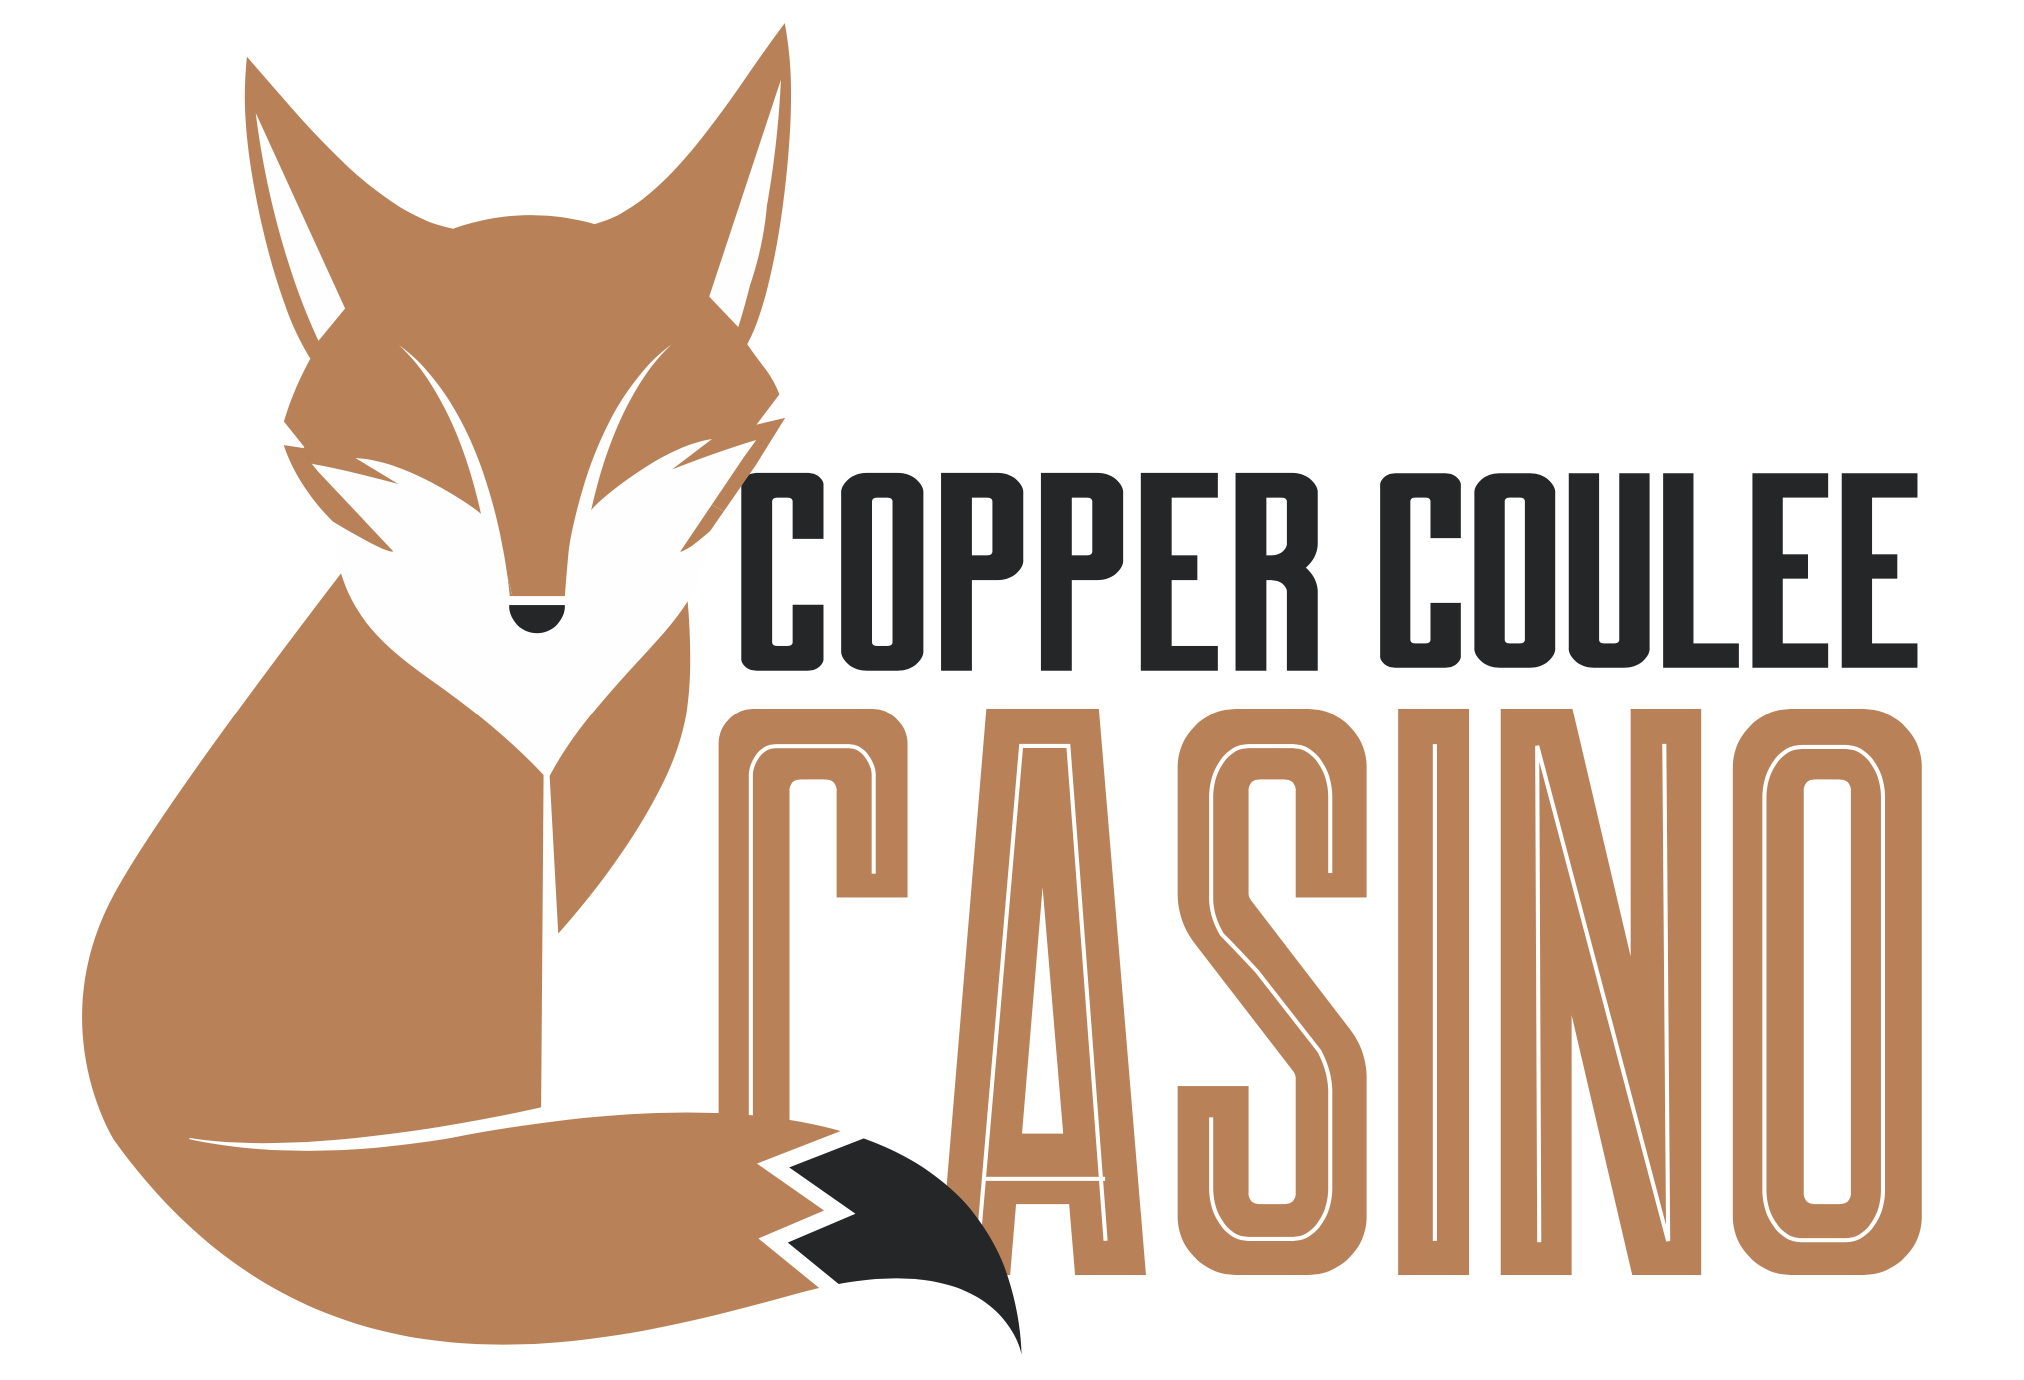 Copper Coulee Casino logo